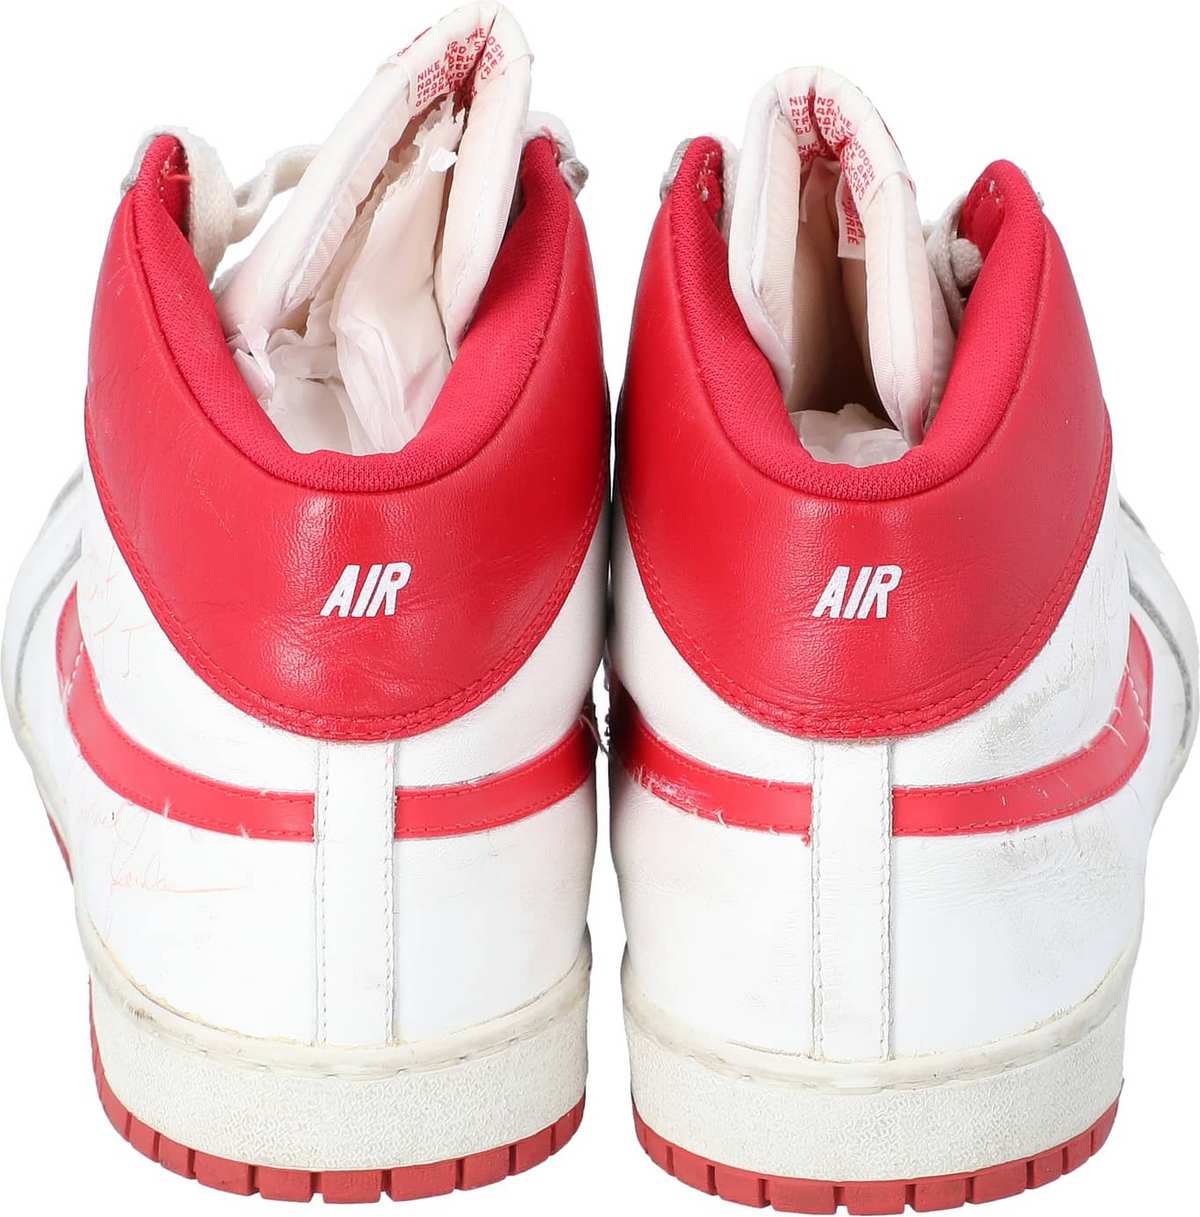 Take a Closer Look at Michael Jordan's Nike Air Ships From 1984